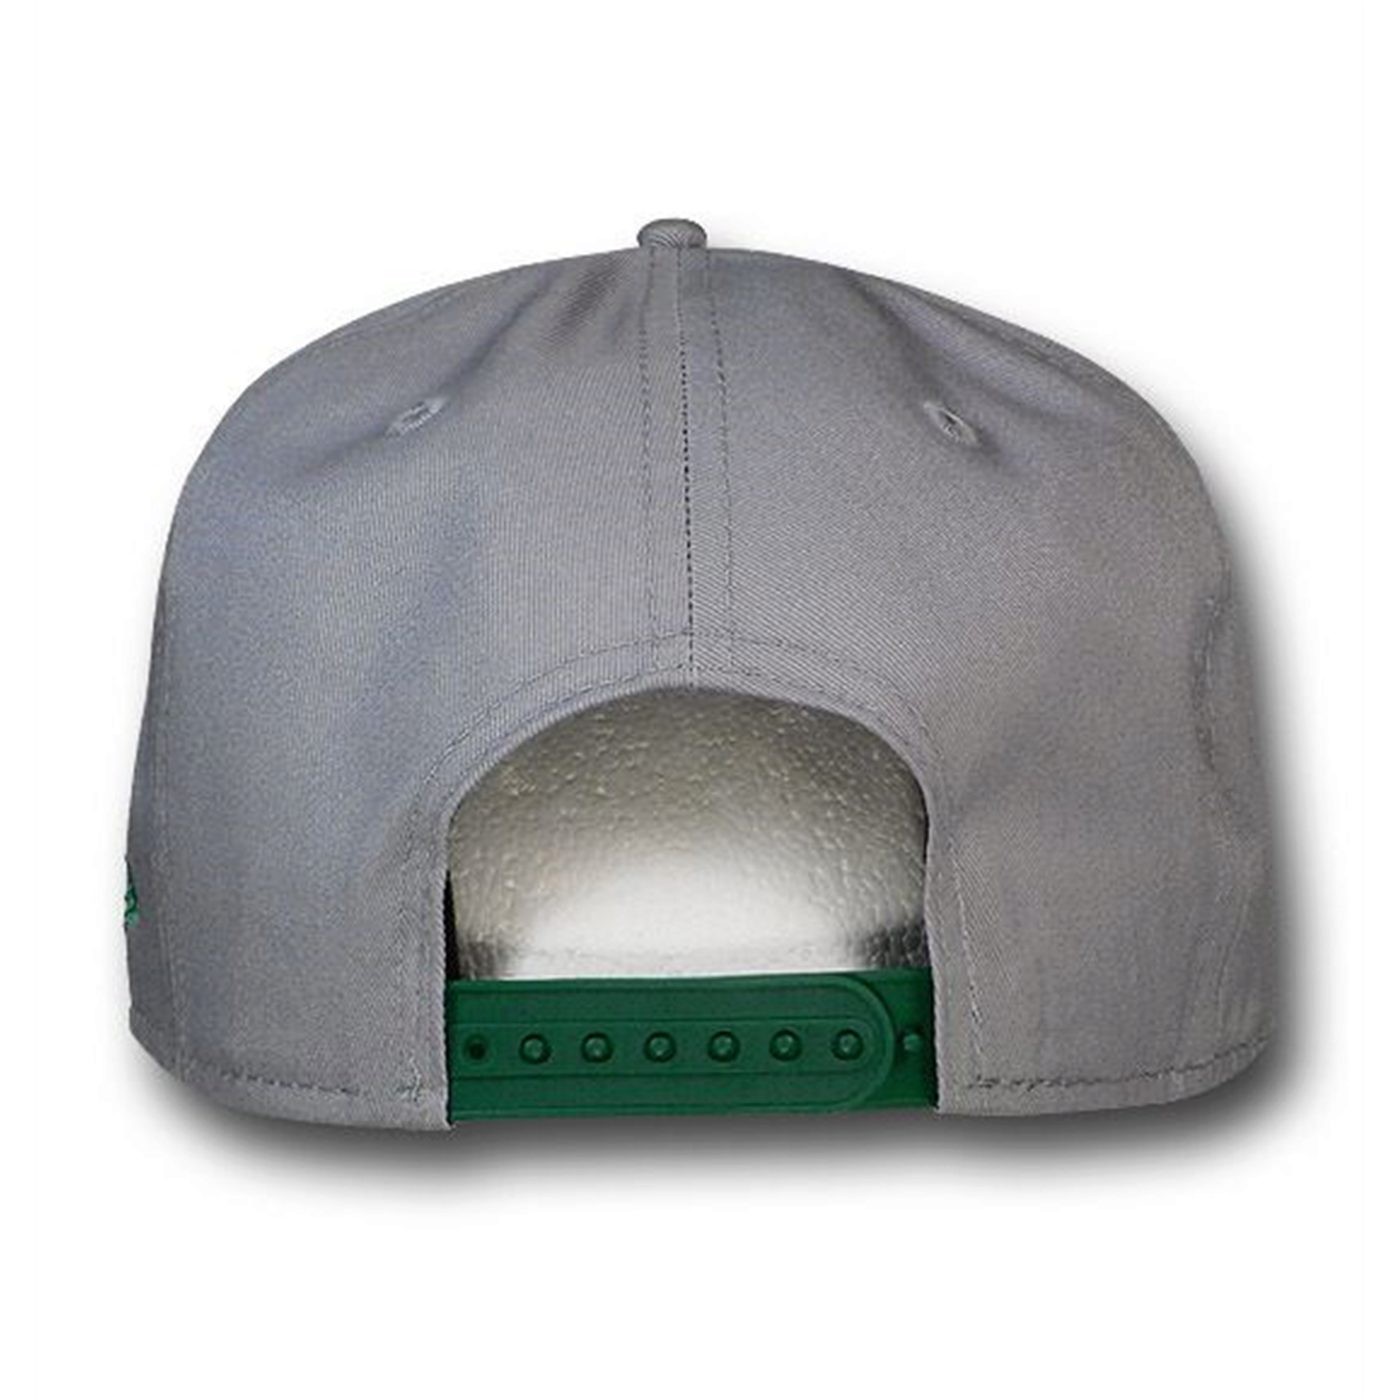 Green Lantern Grey 950 Snapback Cap